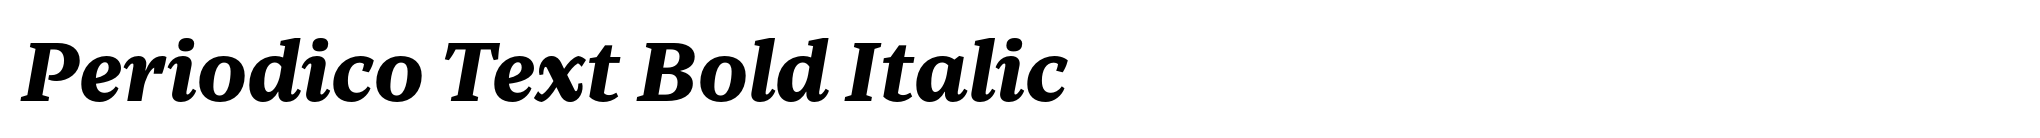 Periodico Text Bold Italic image